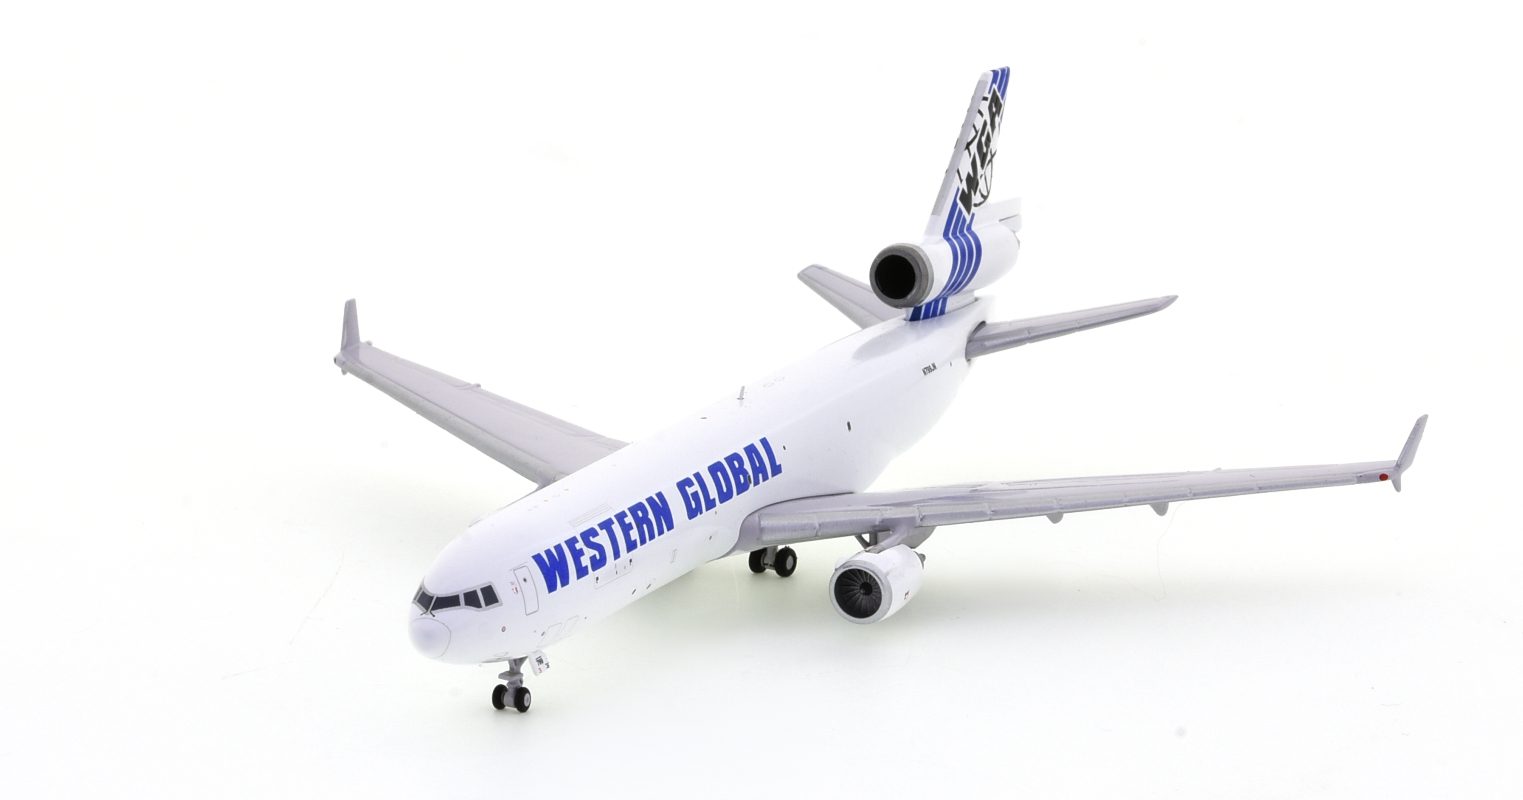 Western Global Md-11f N799jn Gemini Jets G2WGN901 Scale 1 200 for sale online 